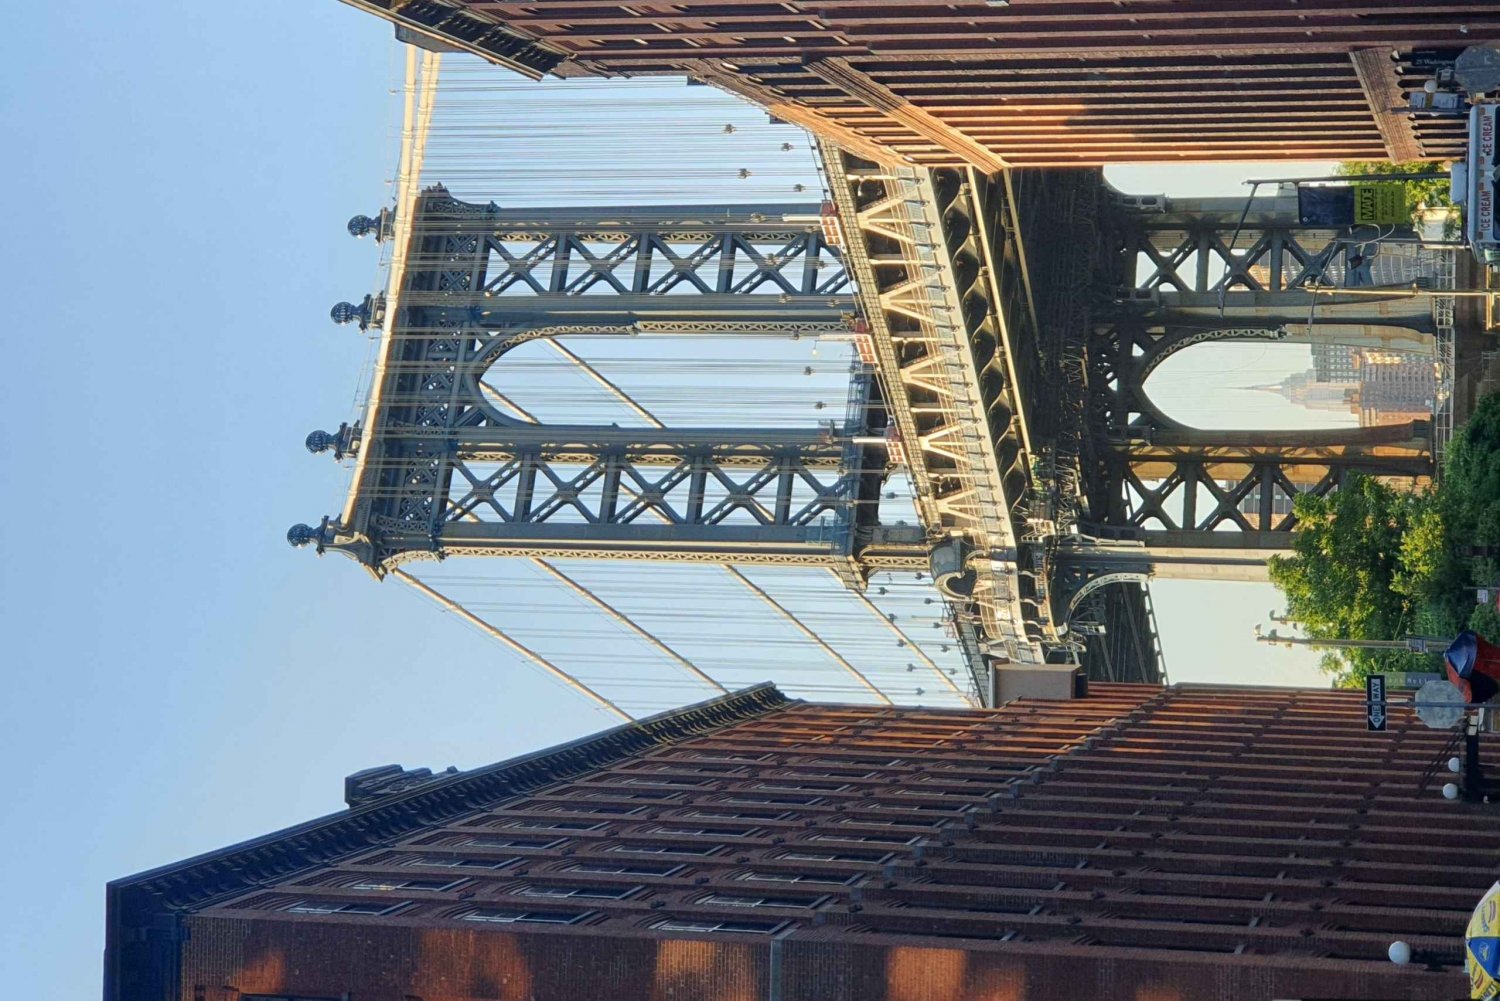 NYC: Dumbo and Brooklyn Bridge Walking Tour